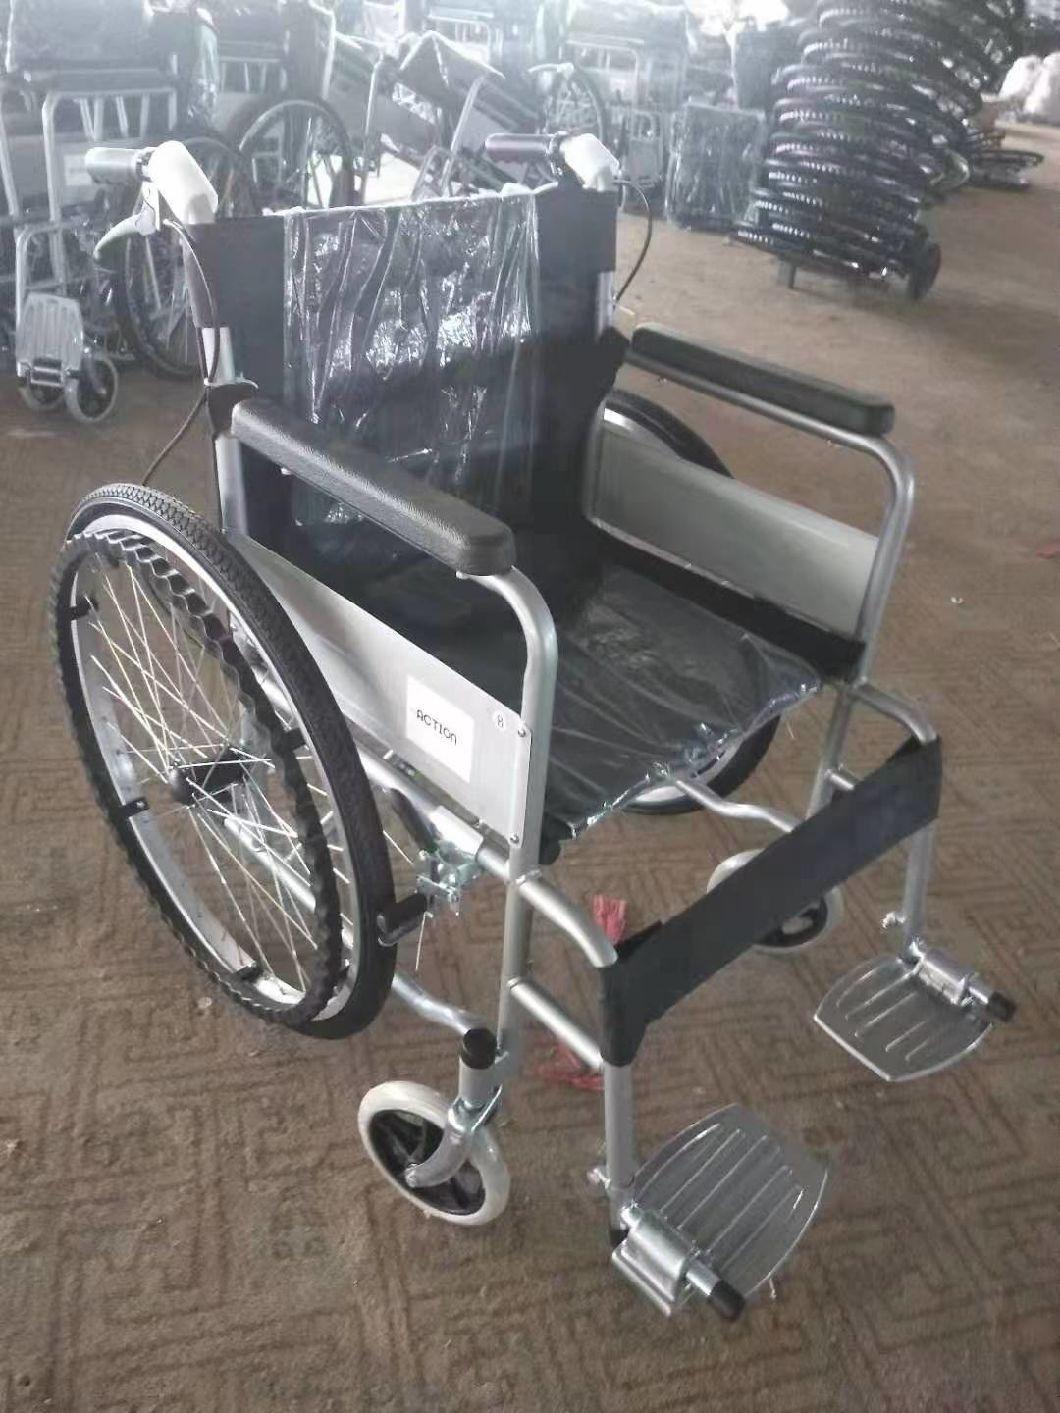 Cheap Lightweight Durable Foldable Manual Wheelchair